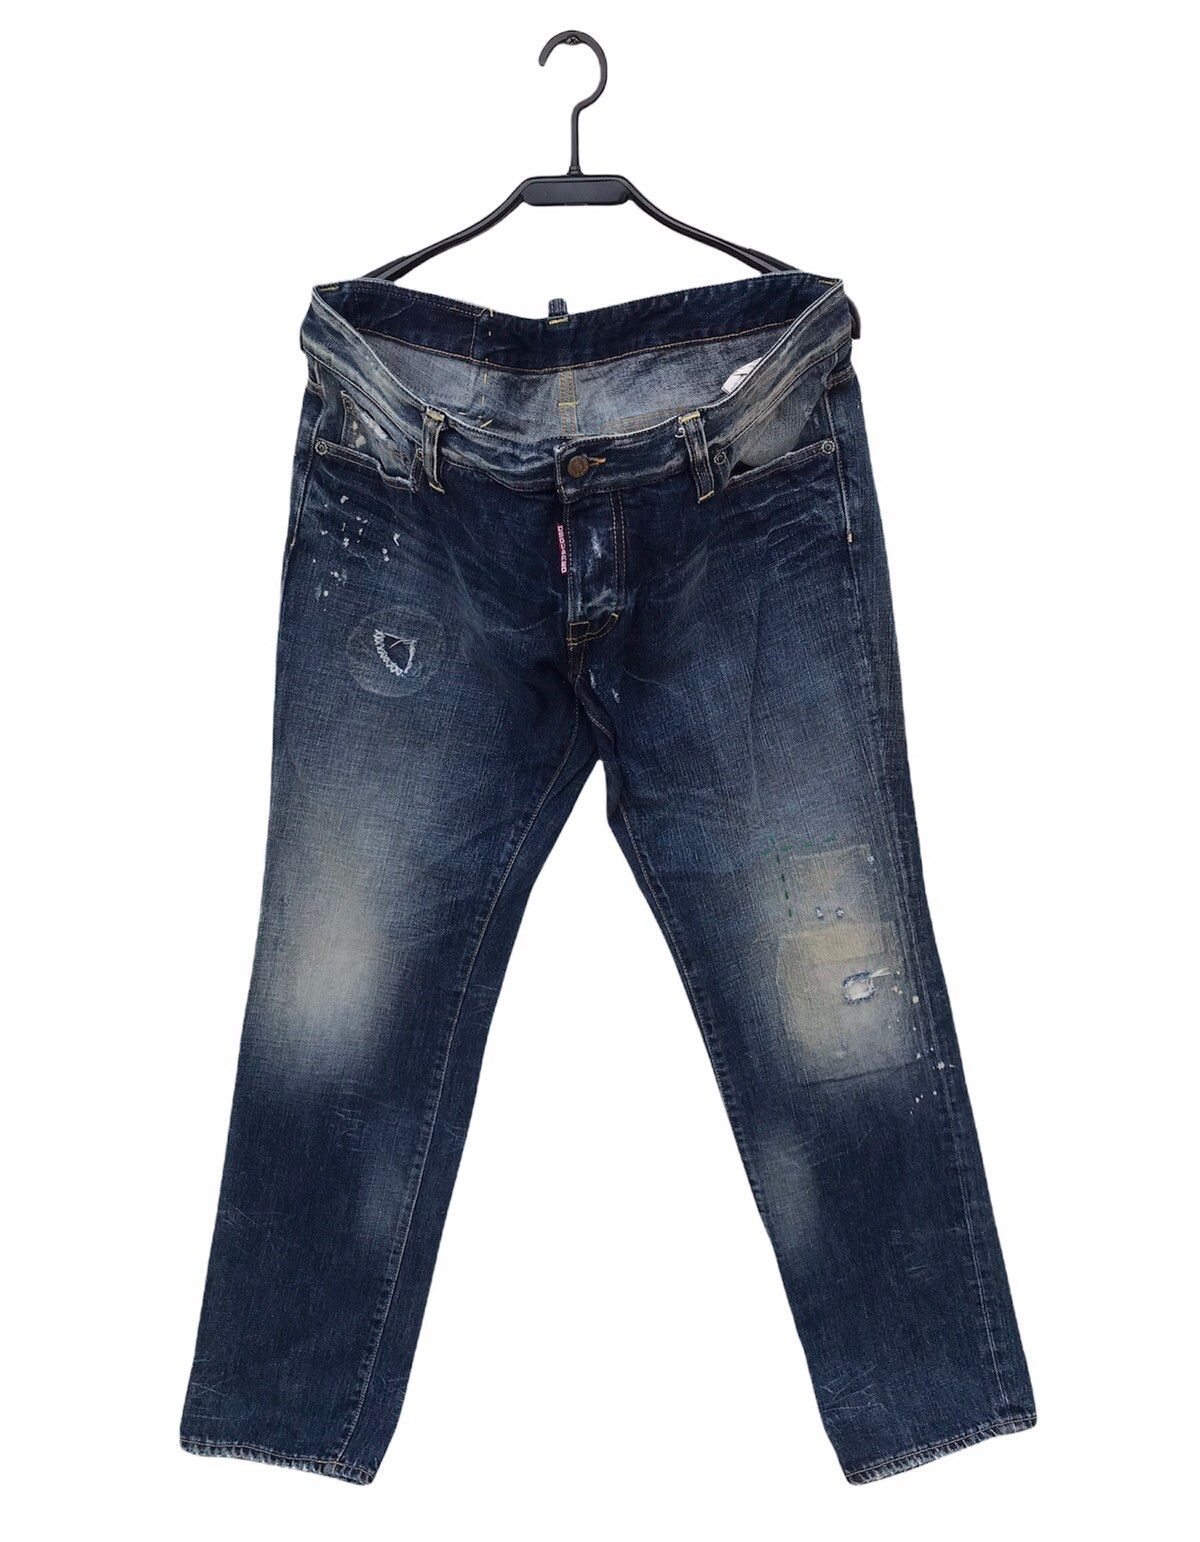 Vintage Dsquared2 Denim Jeans Rare Design - 2